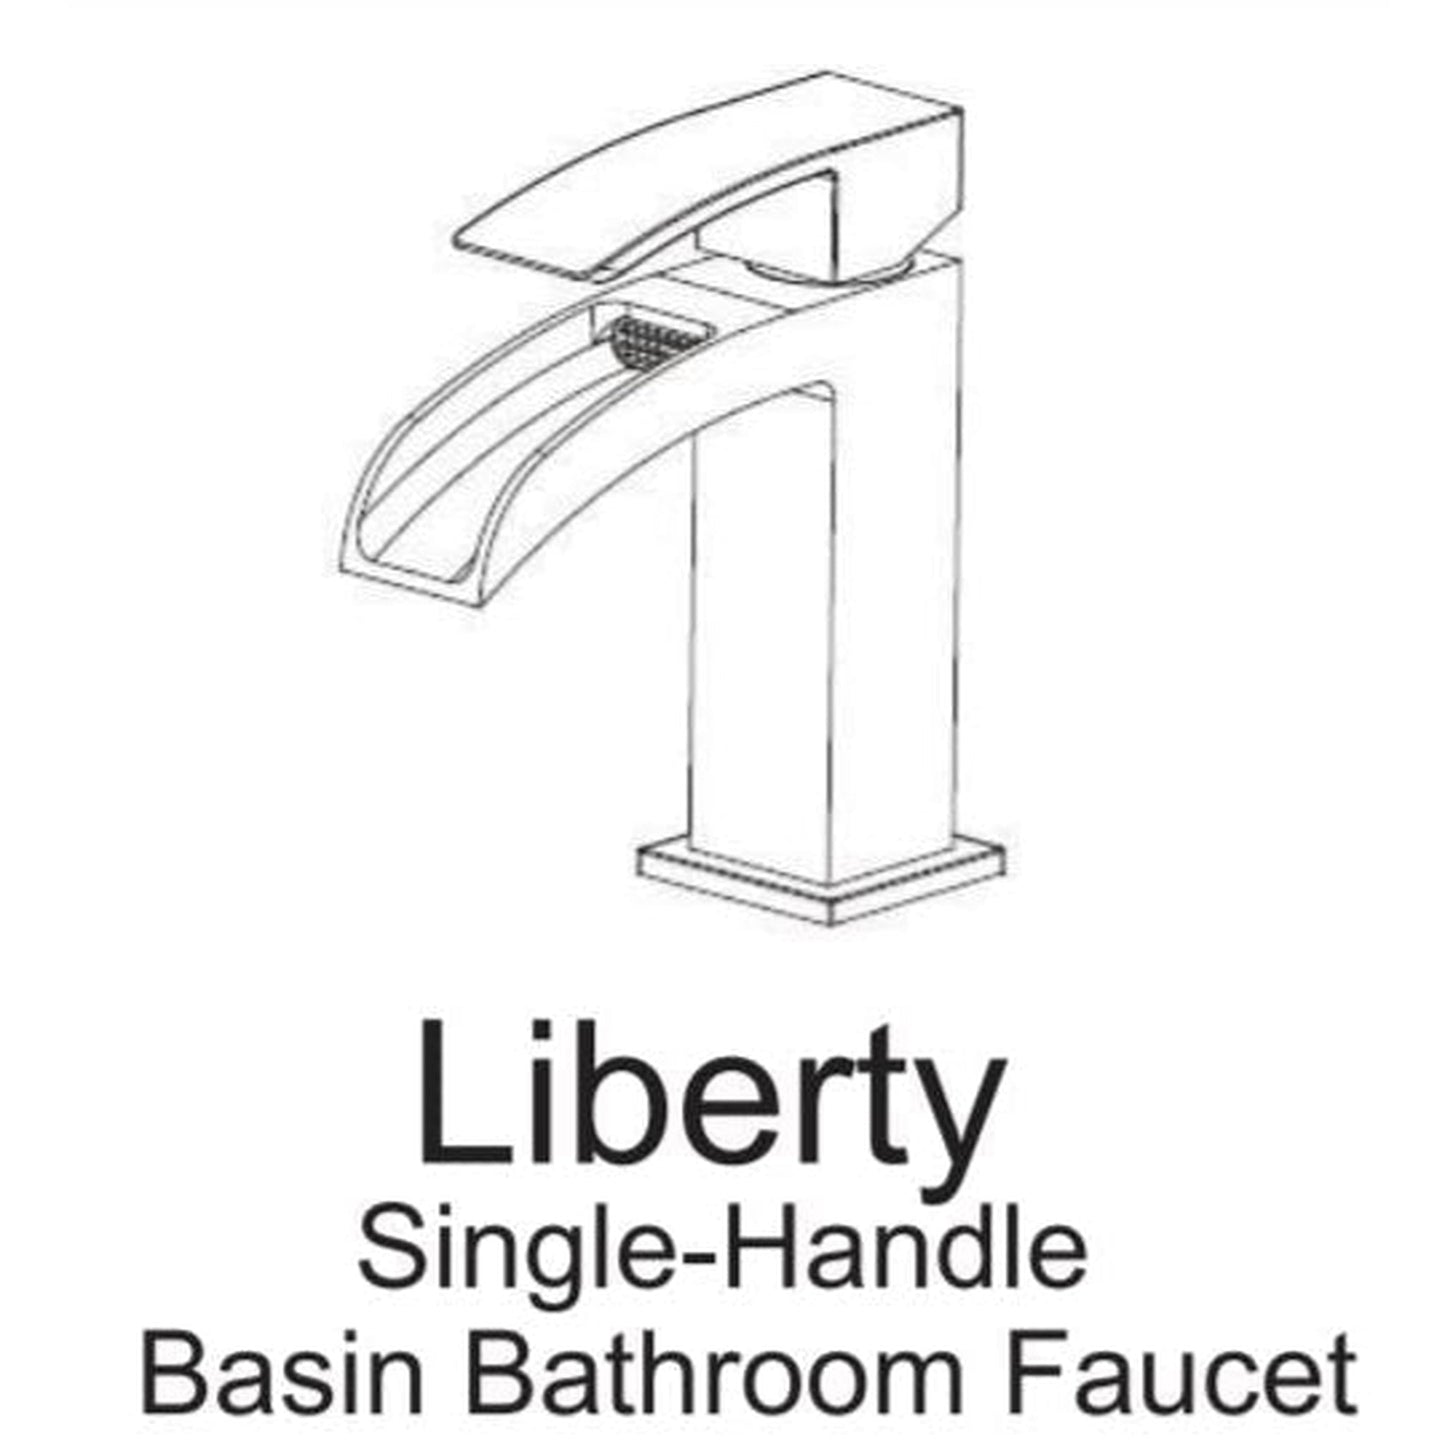 Vinnova Liberty 6" Single Hole Satin Nickel Low Arc Waterfall Bathroom Sink Faucet